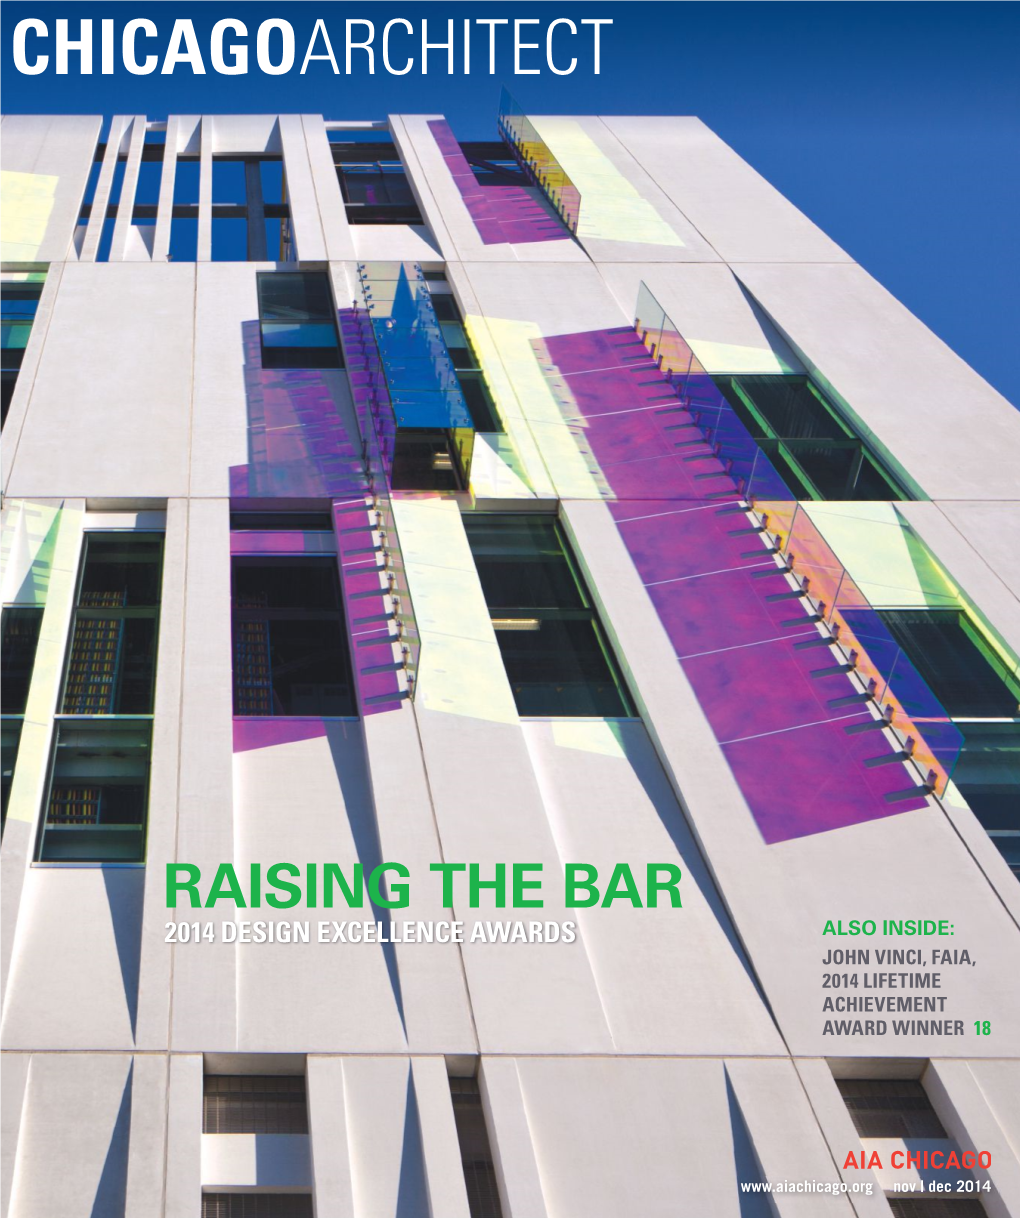 Raising the Bar 2014 Design Excellence Awards Also Inside: John Vinci, Faia, 2014 Lifetime Achievement Award Winner 18